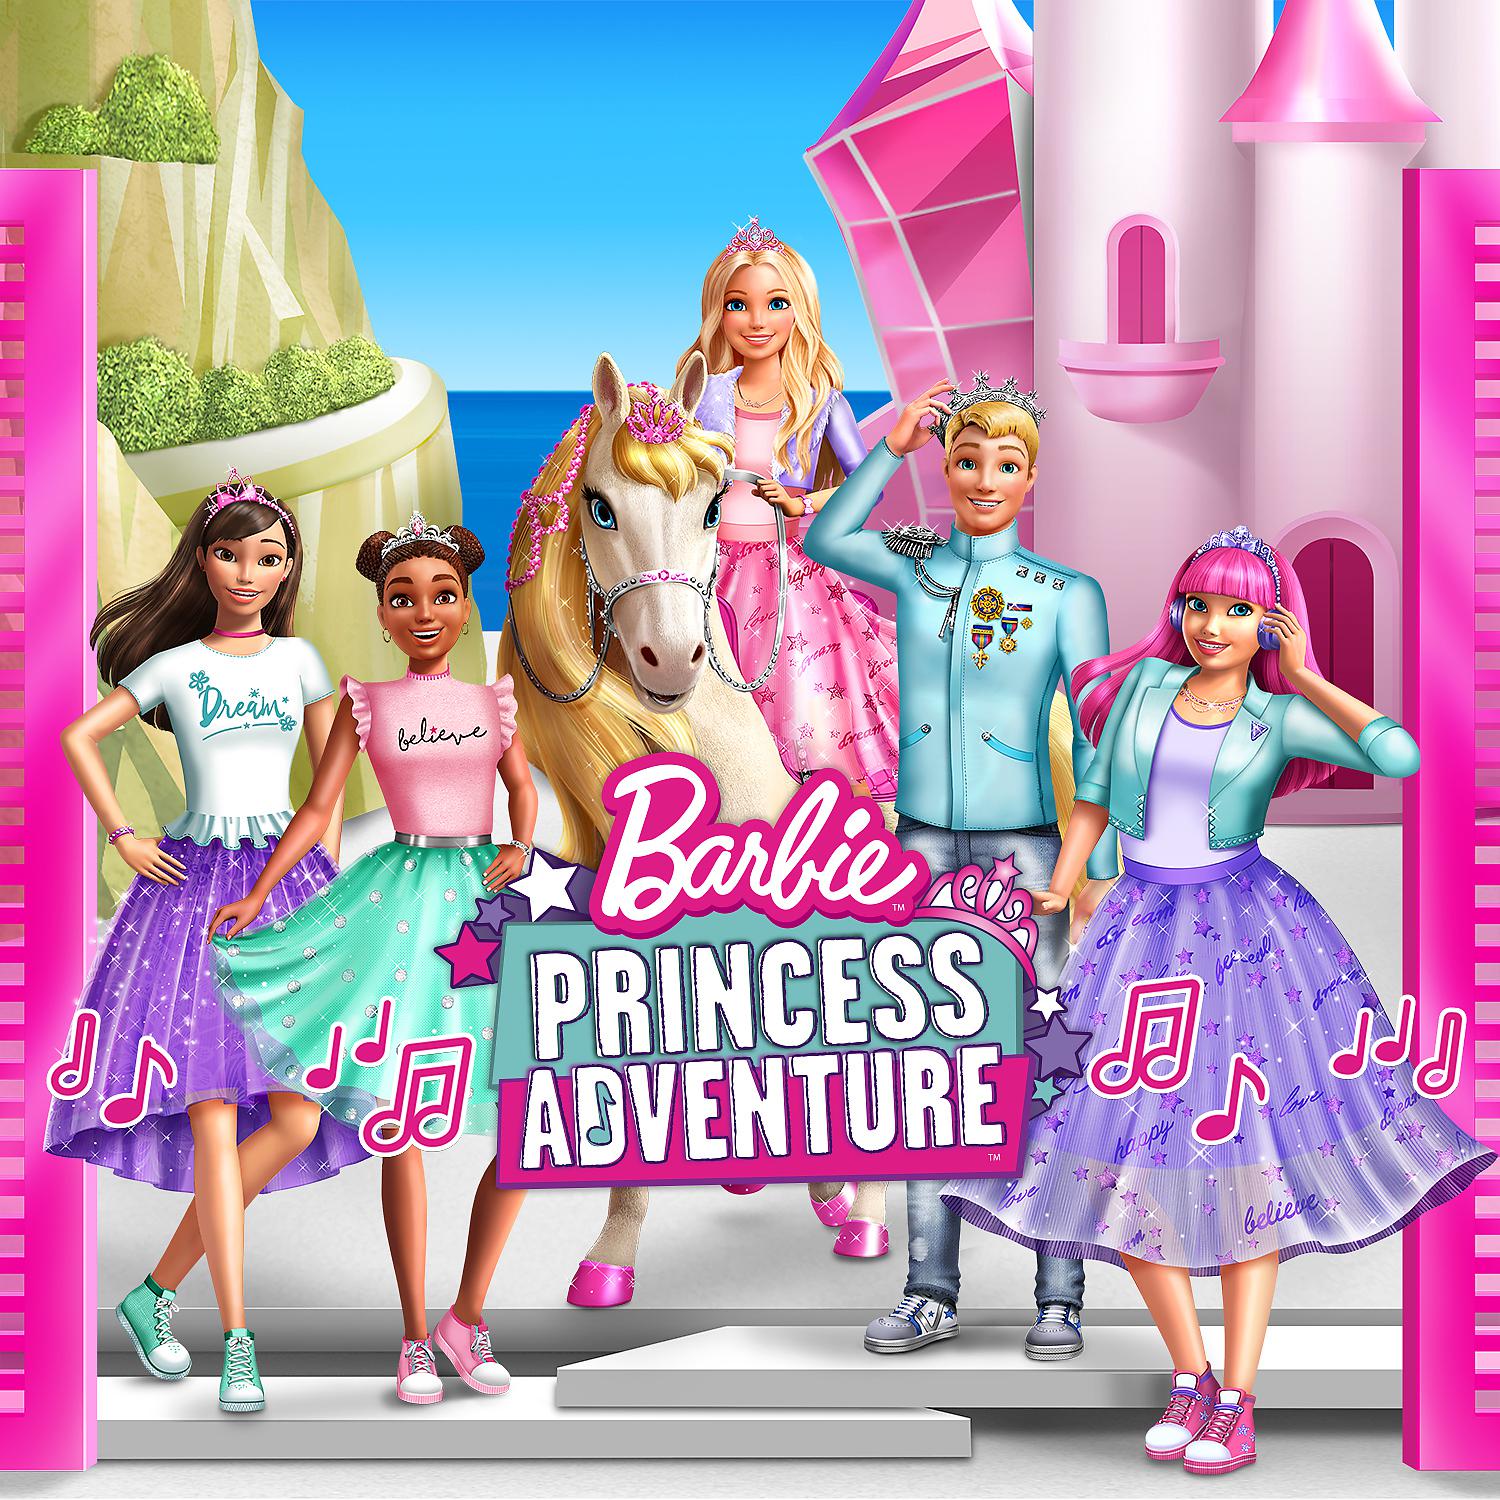 Приключения барби 2020. Барби приключения принцессы 2020. Барби Princess Adventure. Барби Нетфликс.